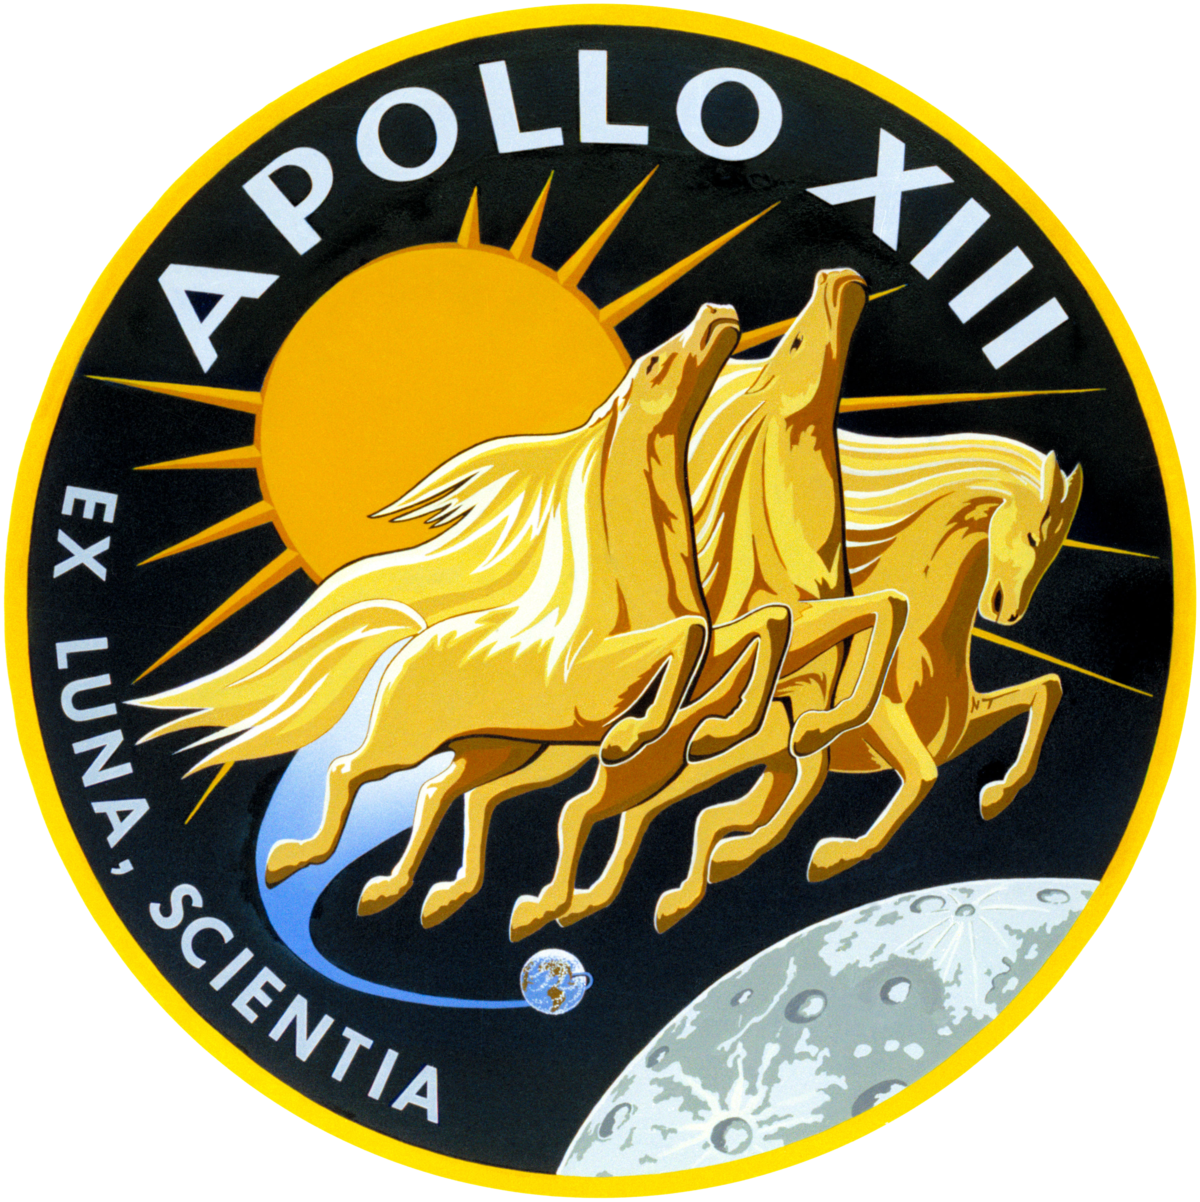 Apolo 13 - Wikipedia, la enciclopedia libre